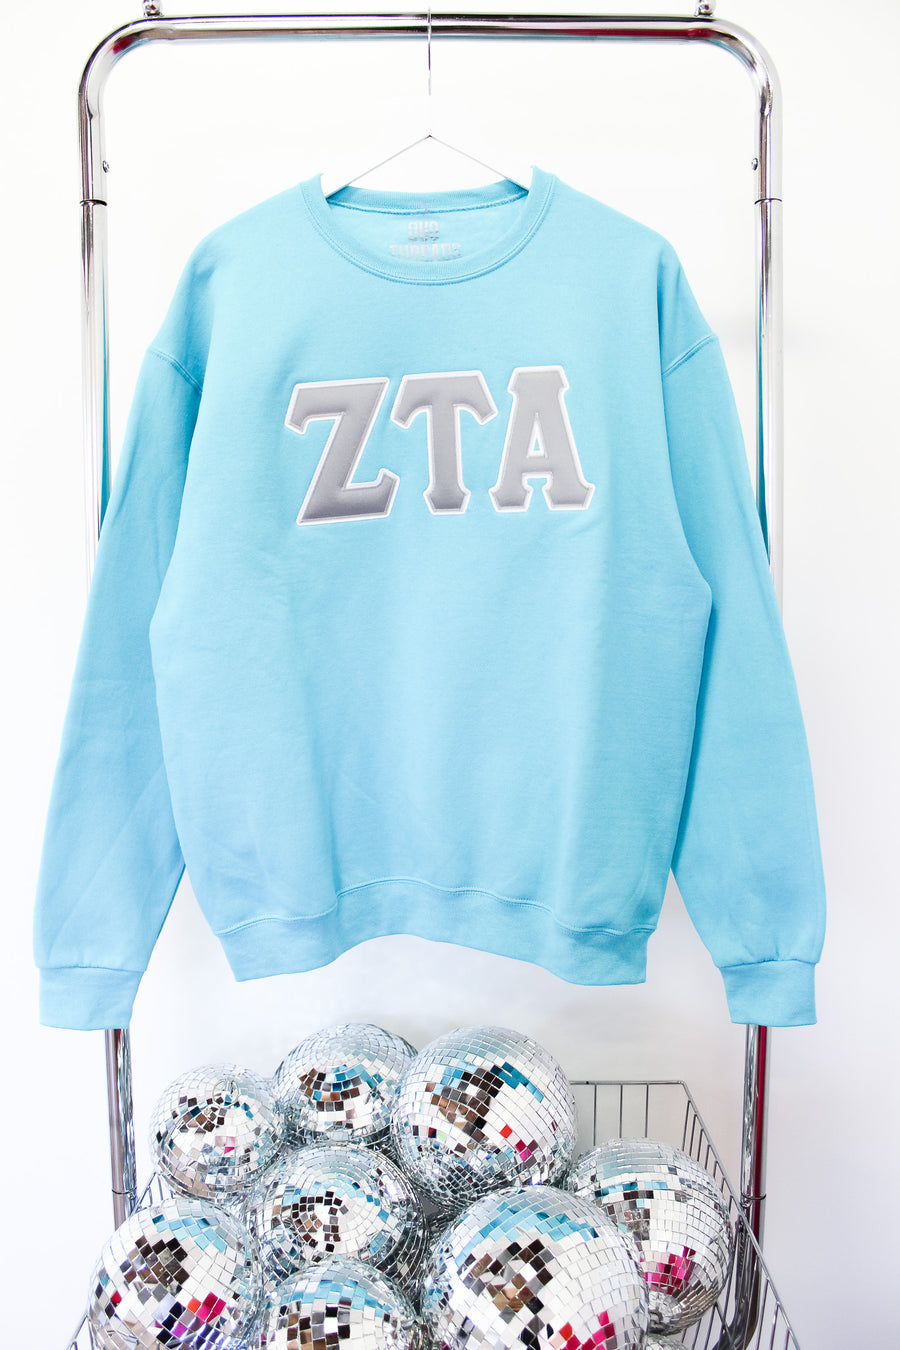 Zeta Tau Alpha Embroidered Letter Crew - LG CHAMBRAY